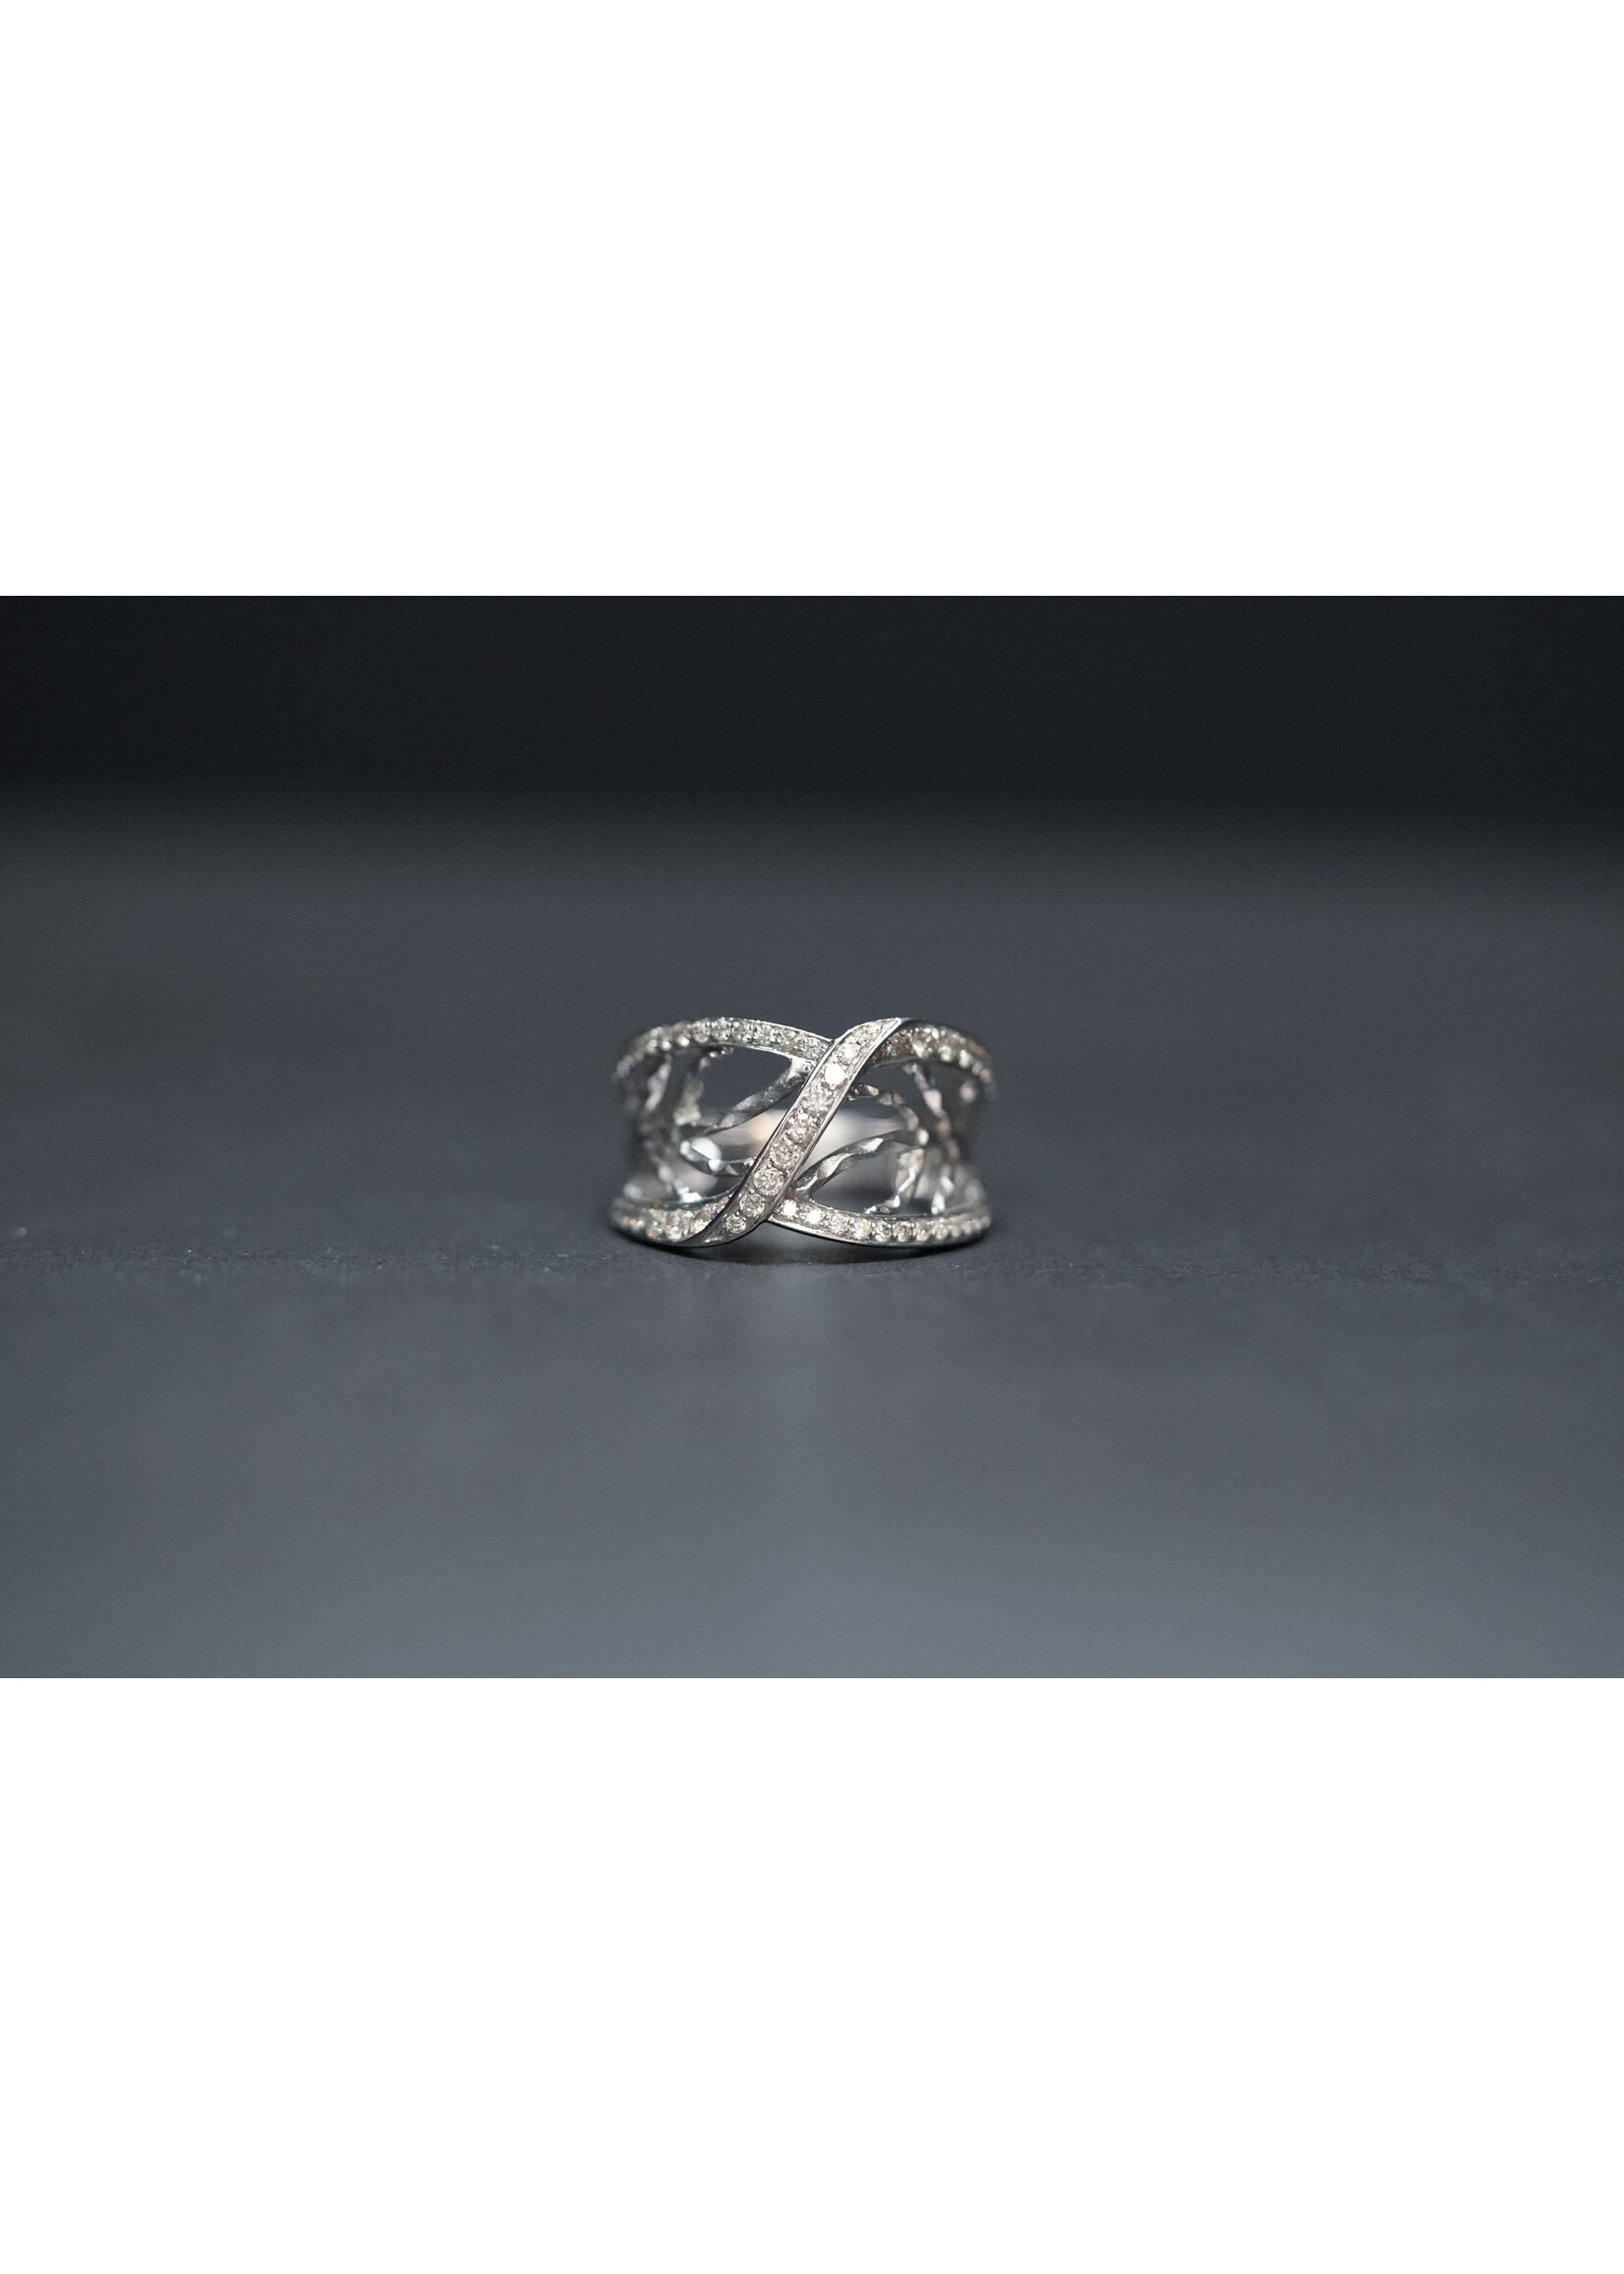 18KW 7.1g .78ctw Diamond Fashion Ring (size 6)